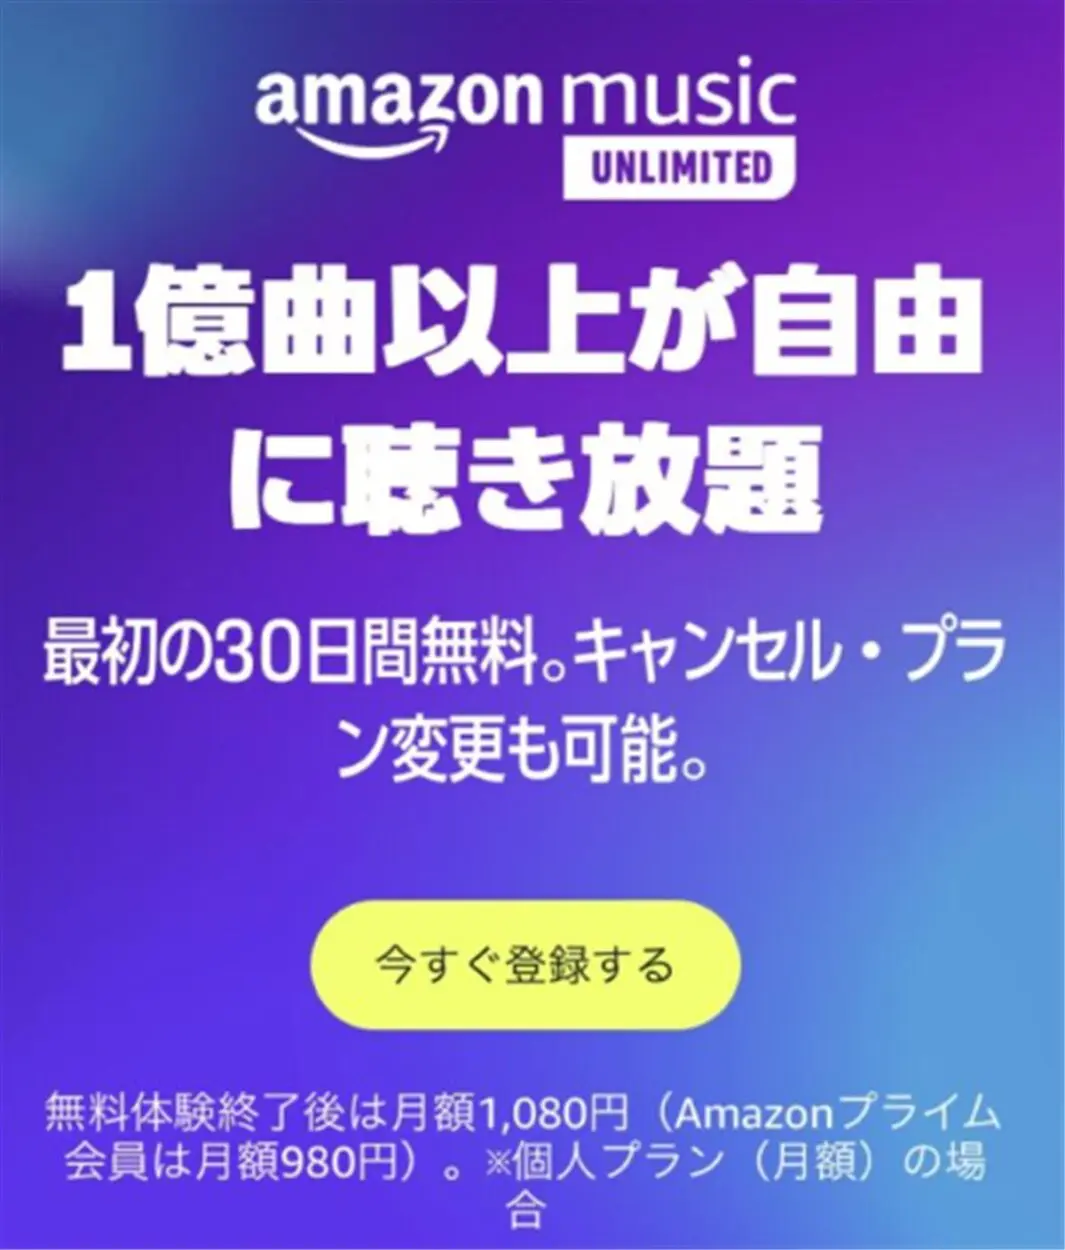 amazon music Unlimitedは毎月1080円の請求